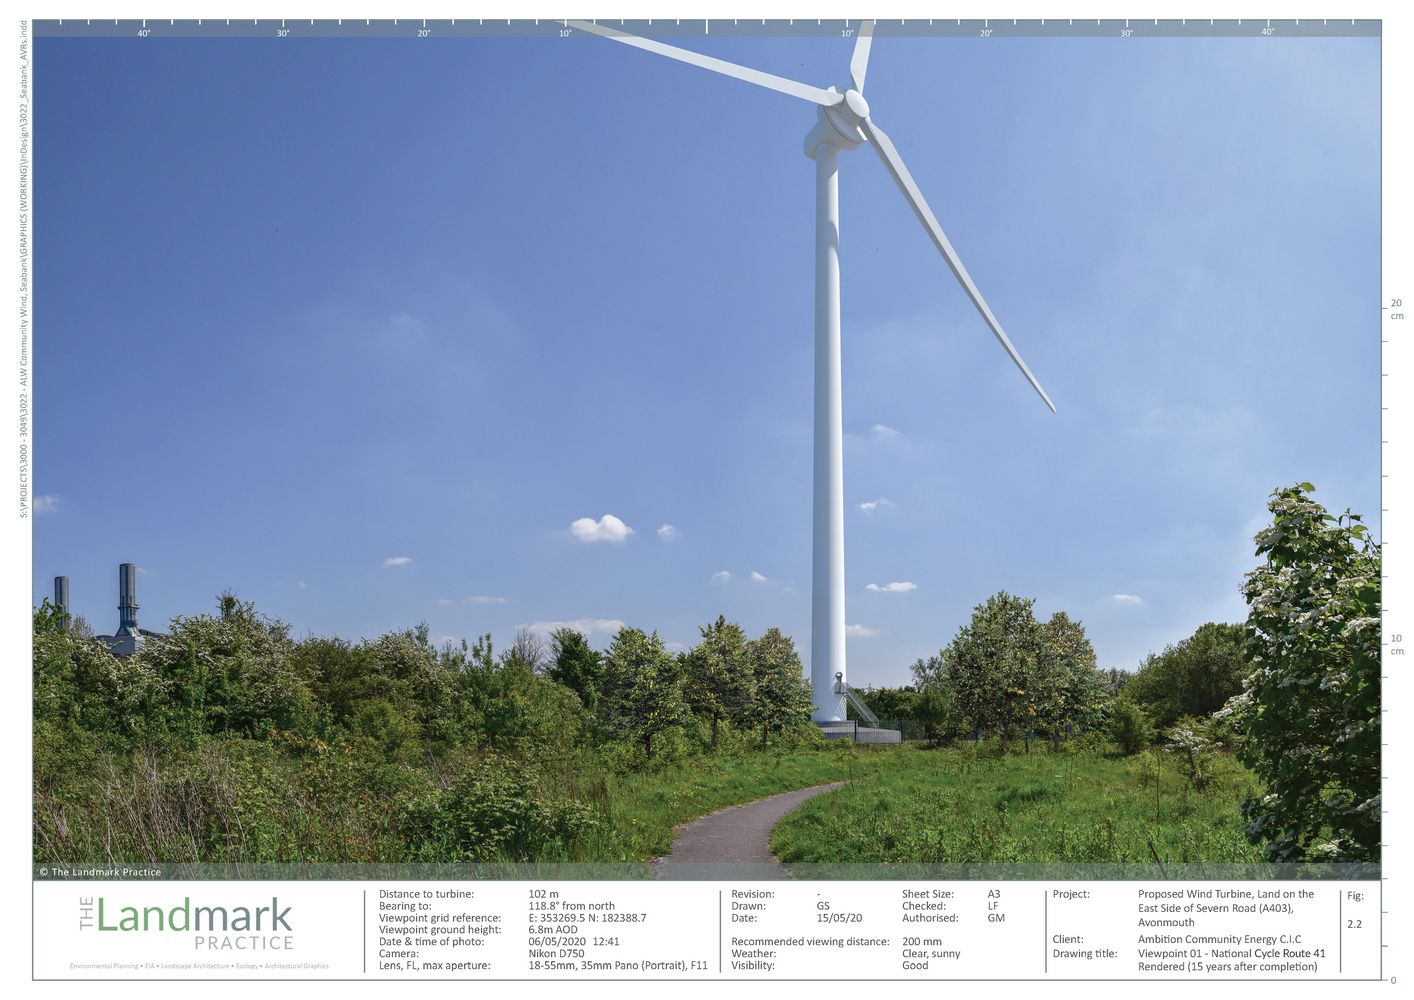 Seabank Community Wind Turbine